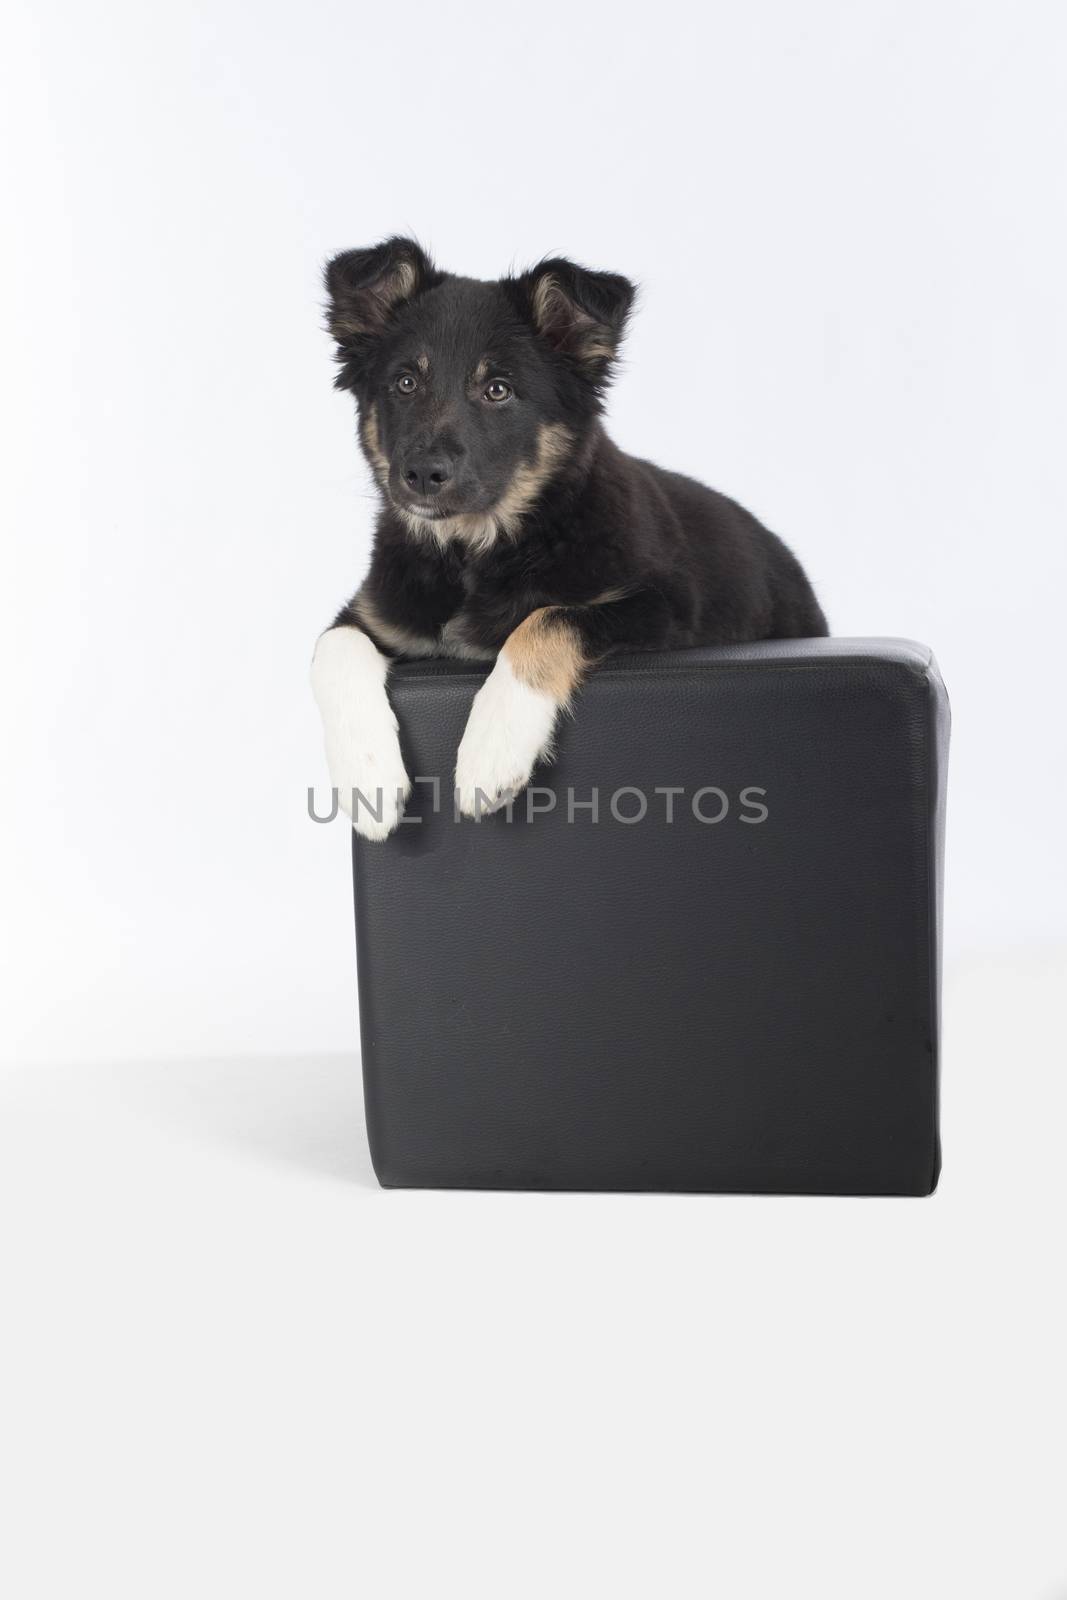 Puppy dog, Border Collie, hanging on pouf, white background by avanheertum